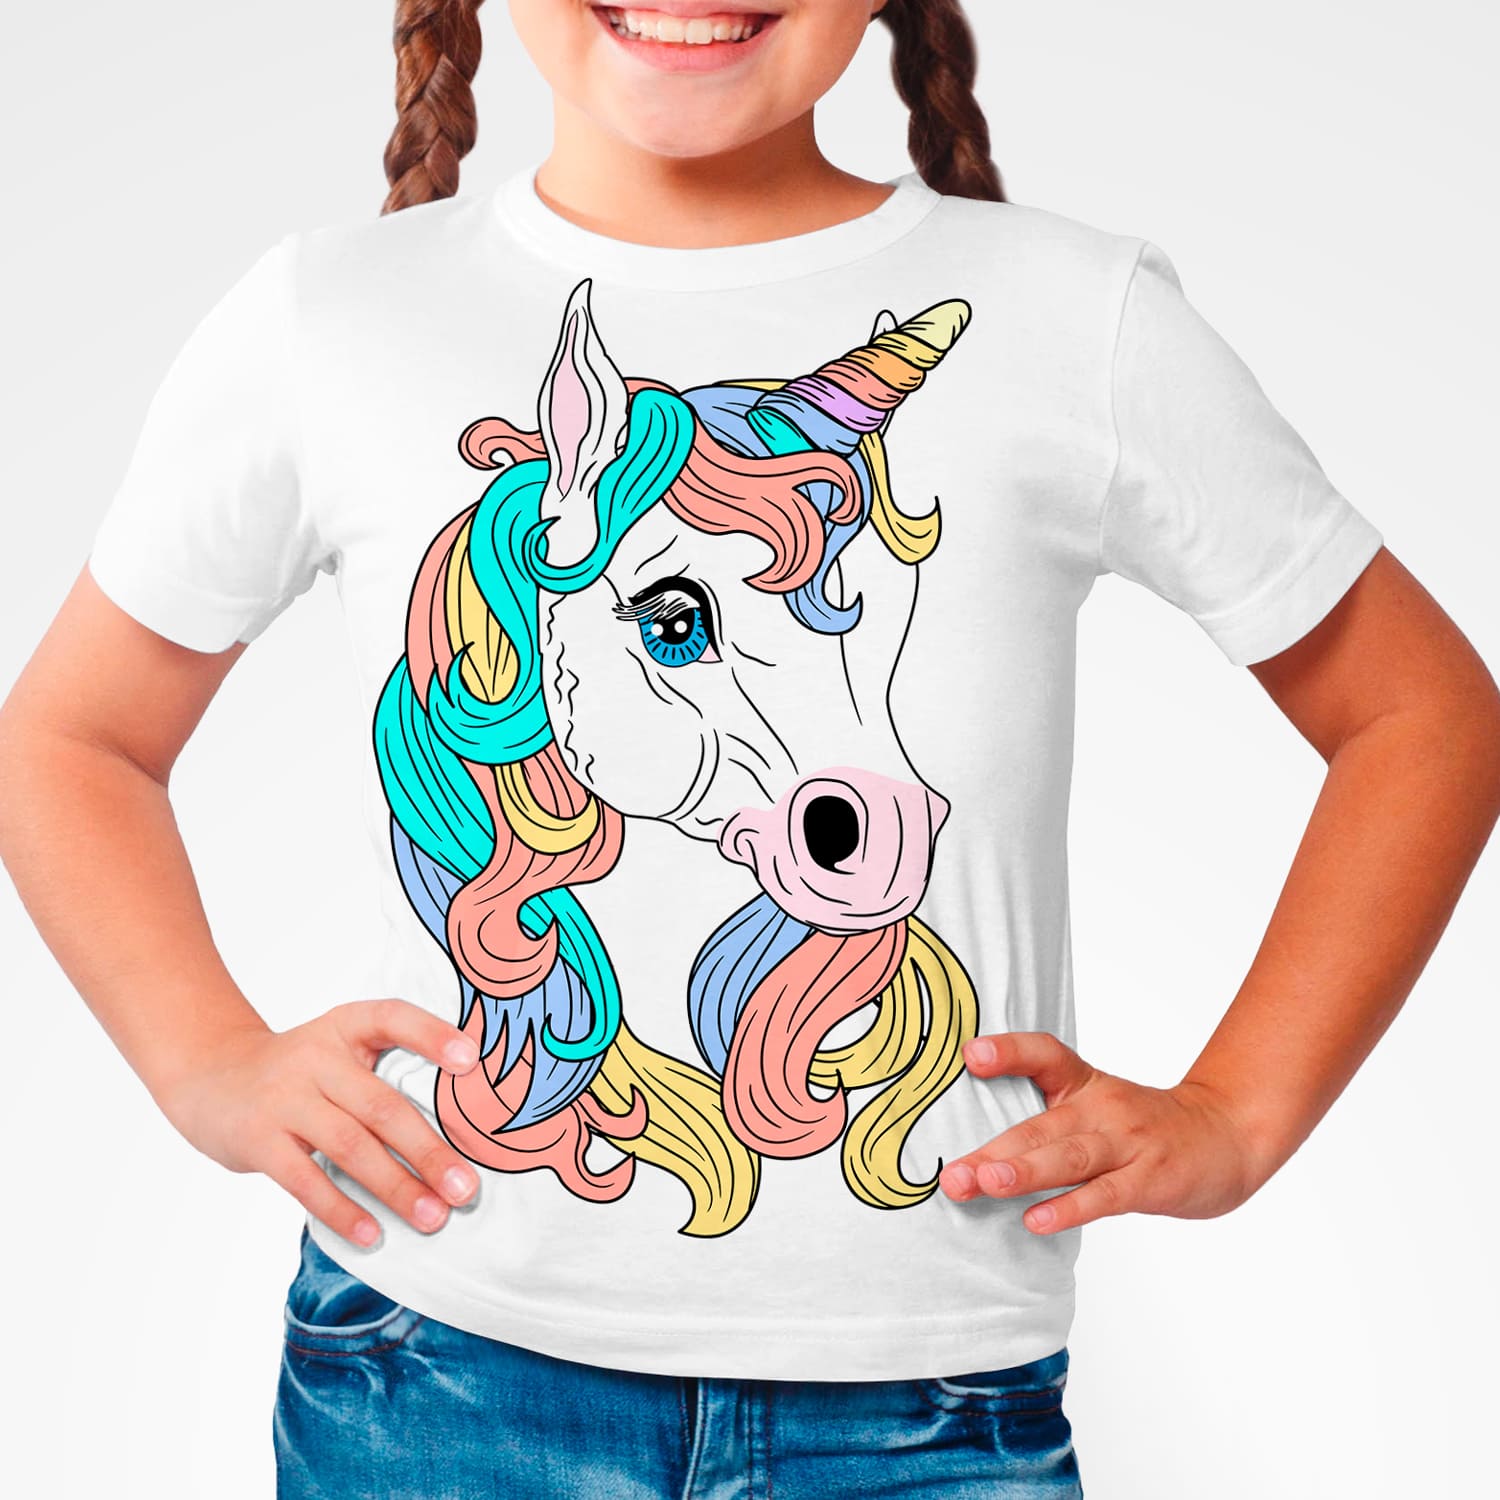 Unicorn face print on the cute t-shirt.